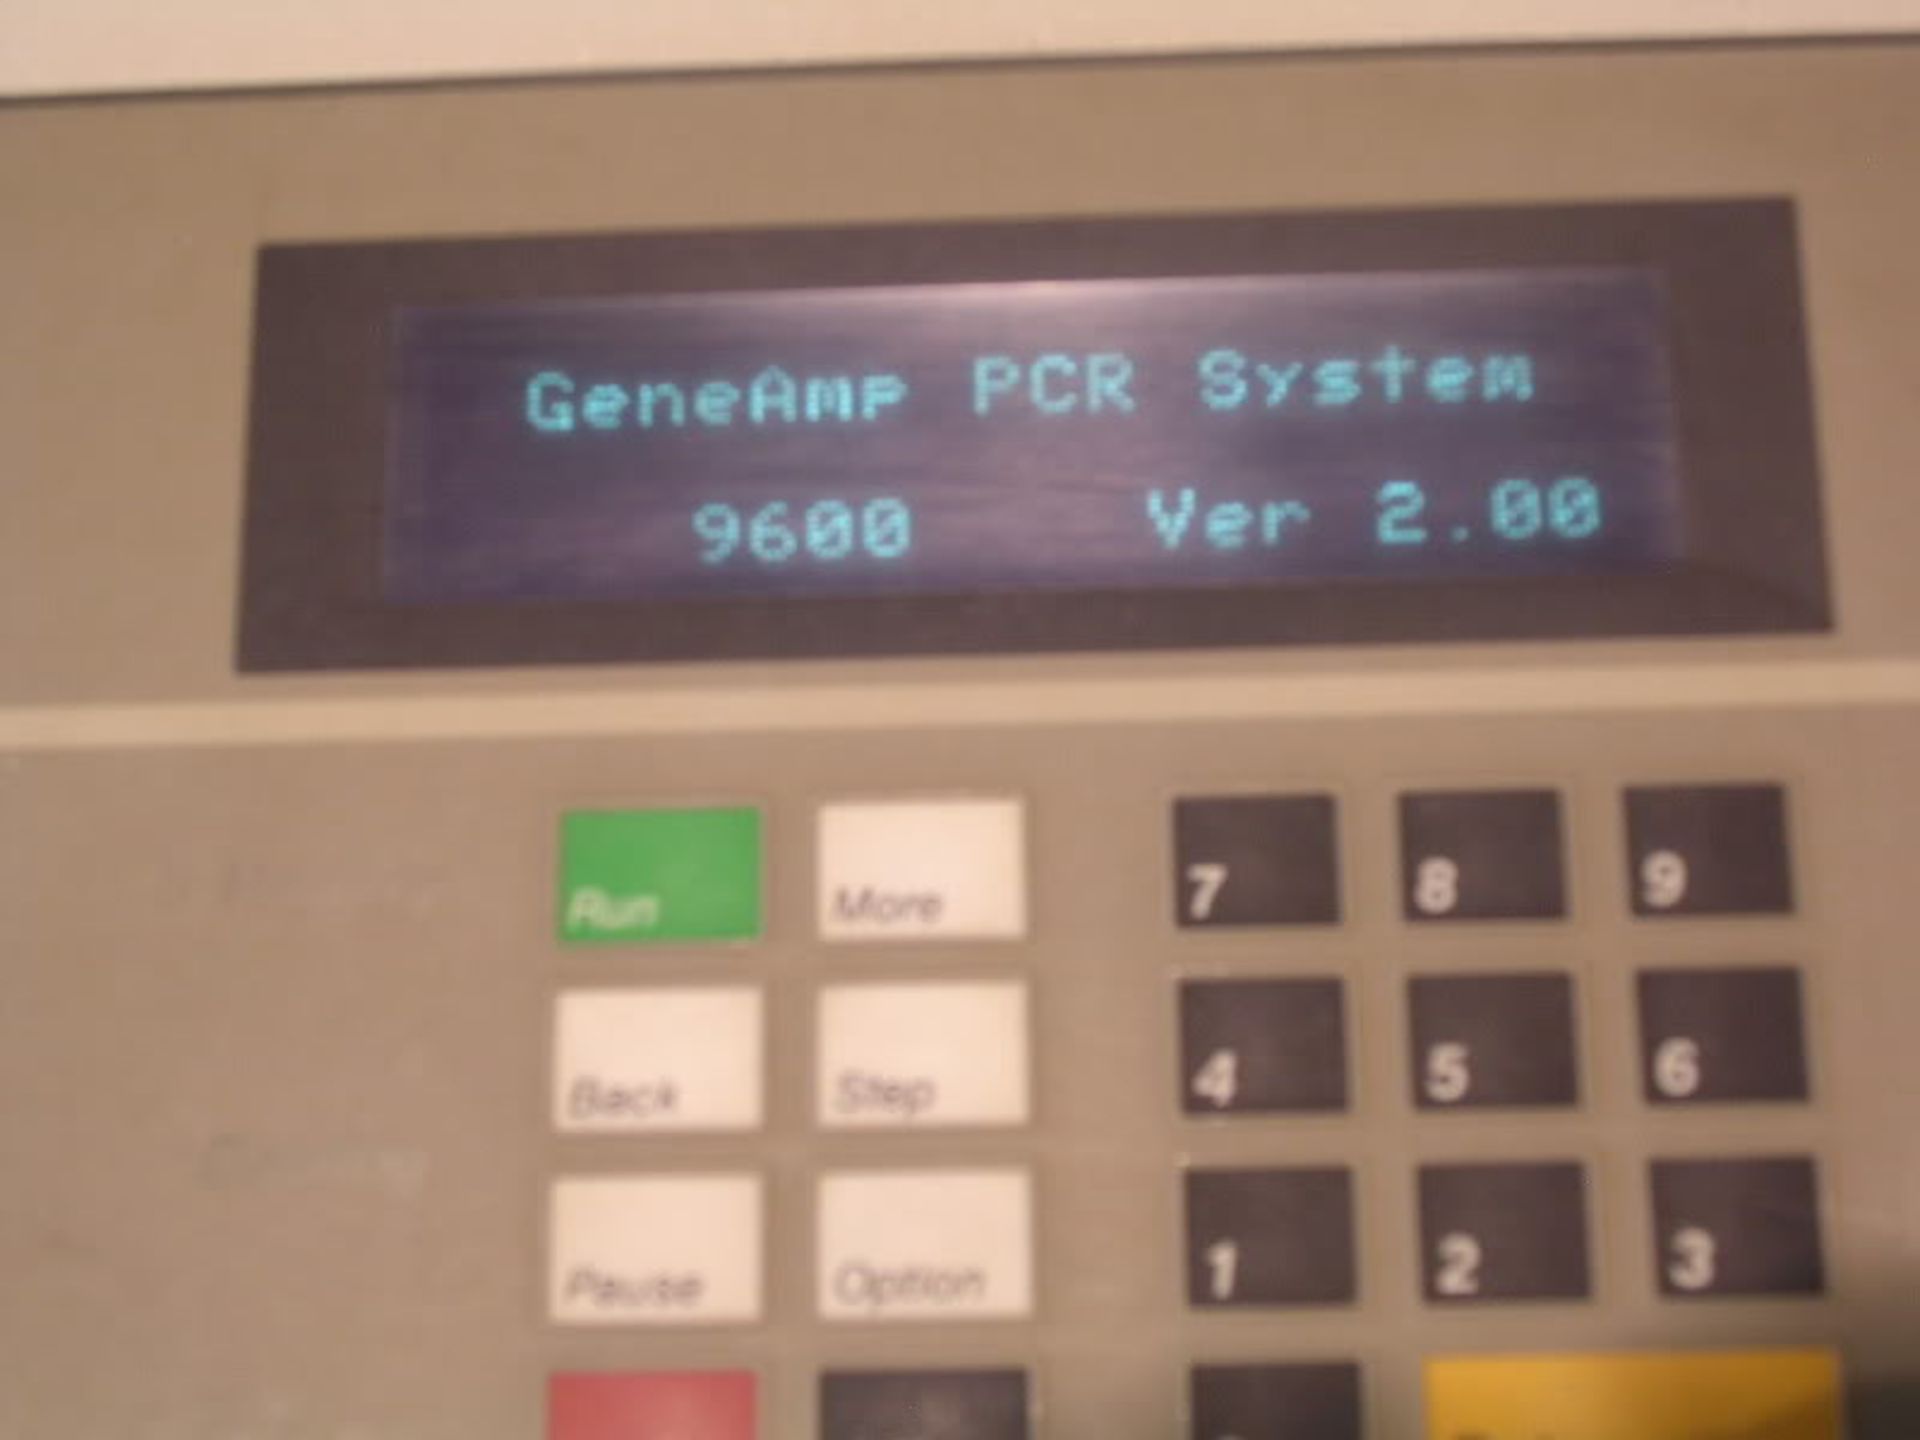 Perkin Elmer GeneAmp PCR System 9600, Qty 2, 321469034618 - Image 7 of 8